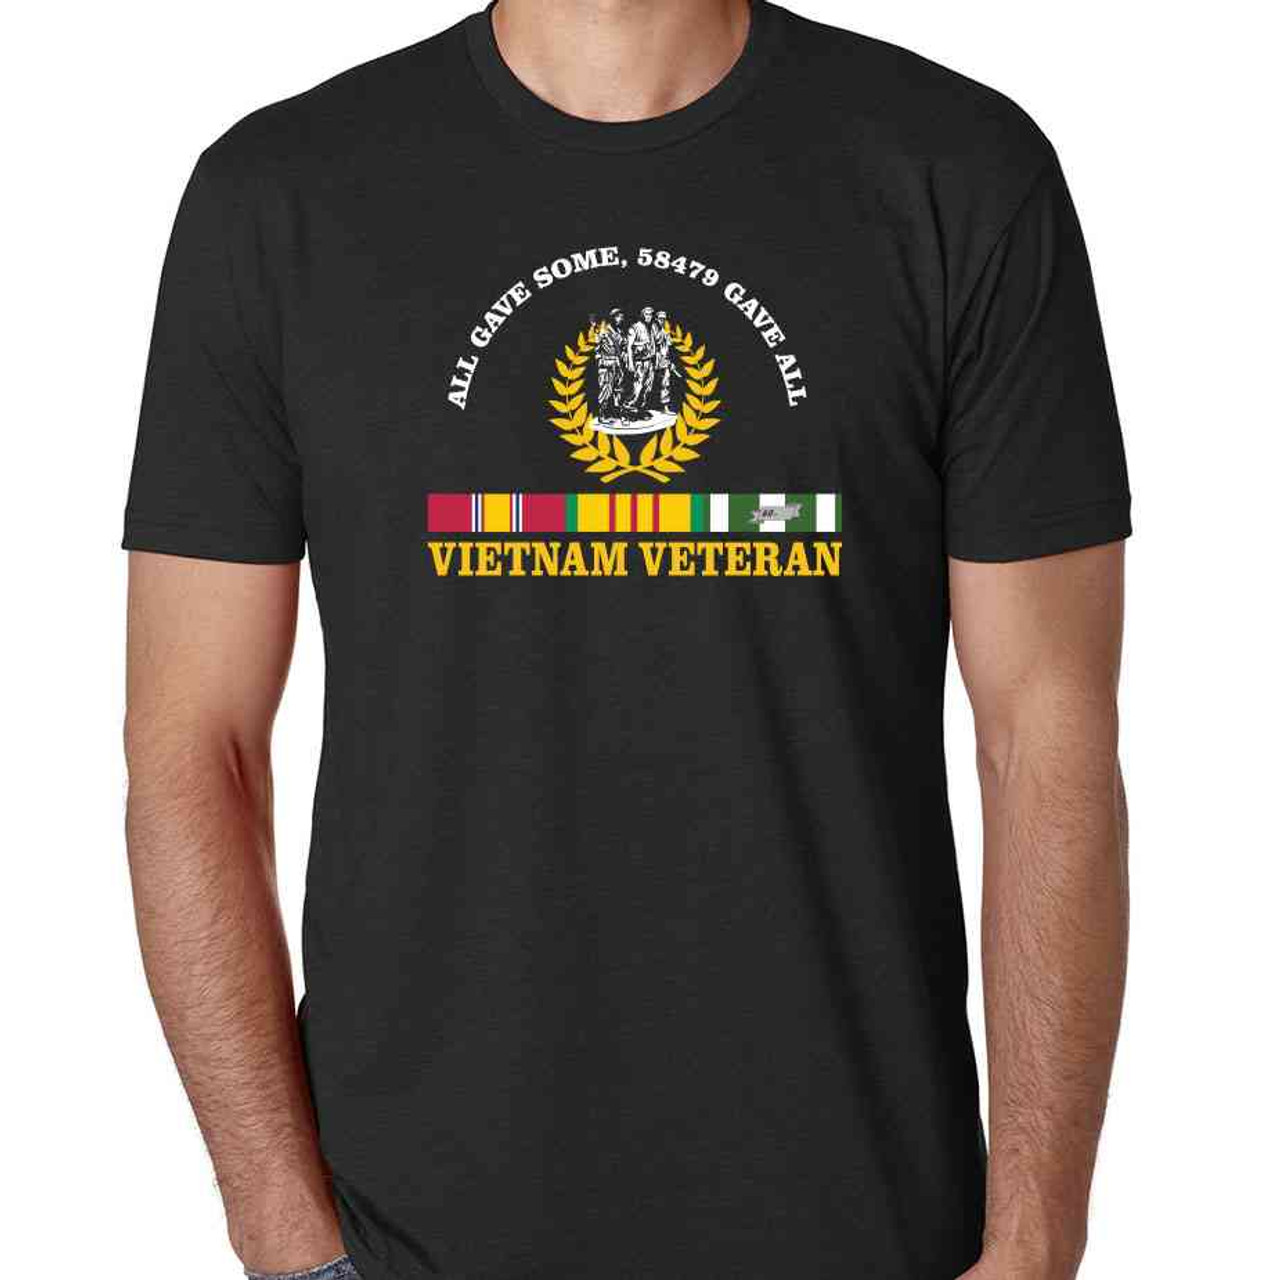 Vietnam Vet All Gave Some, 58479 Gave All -Long Sleeve Shirt